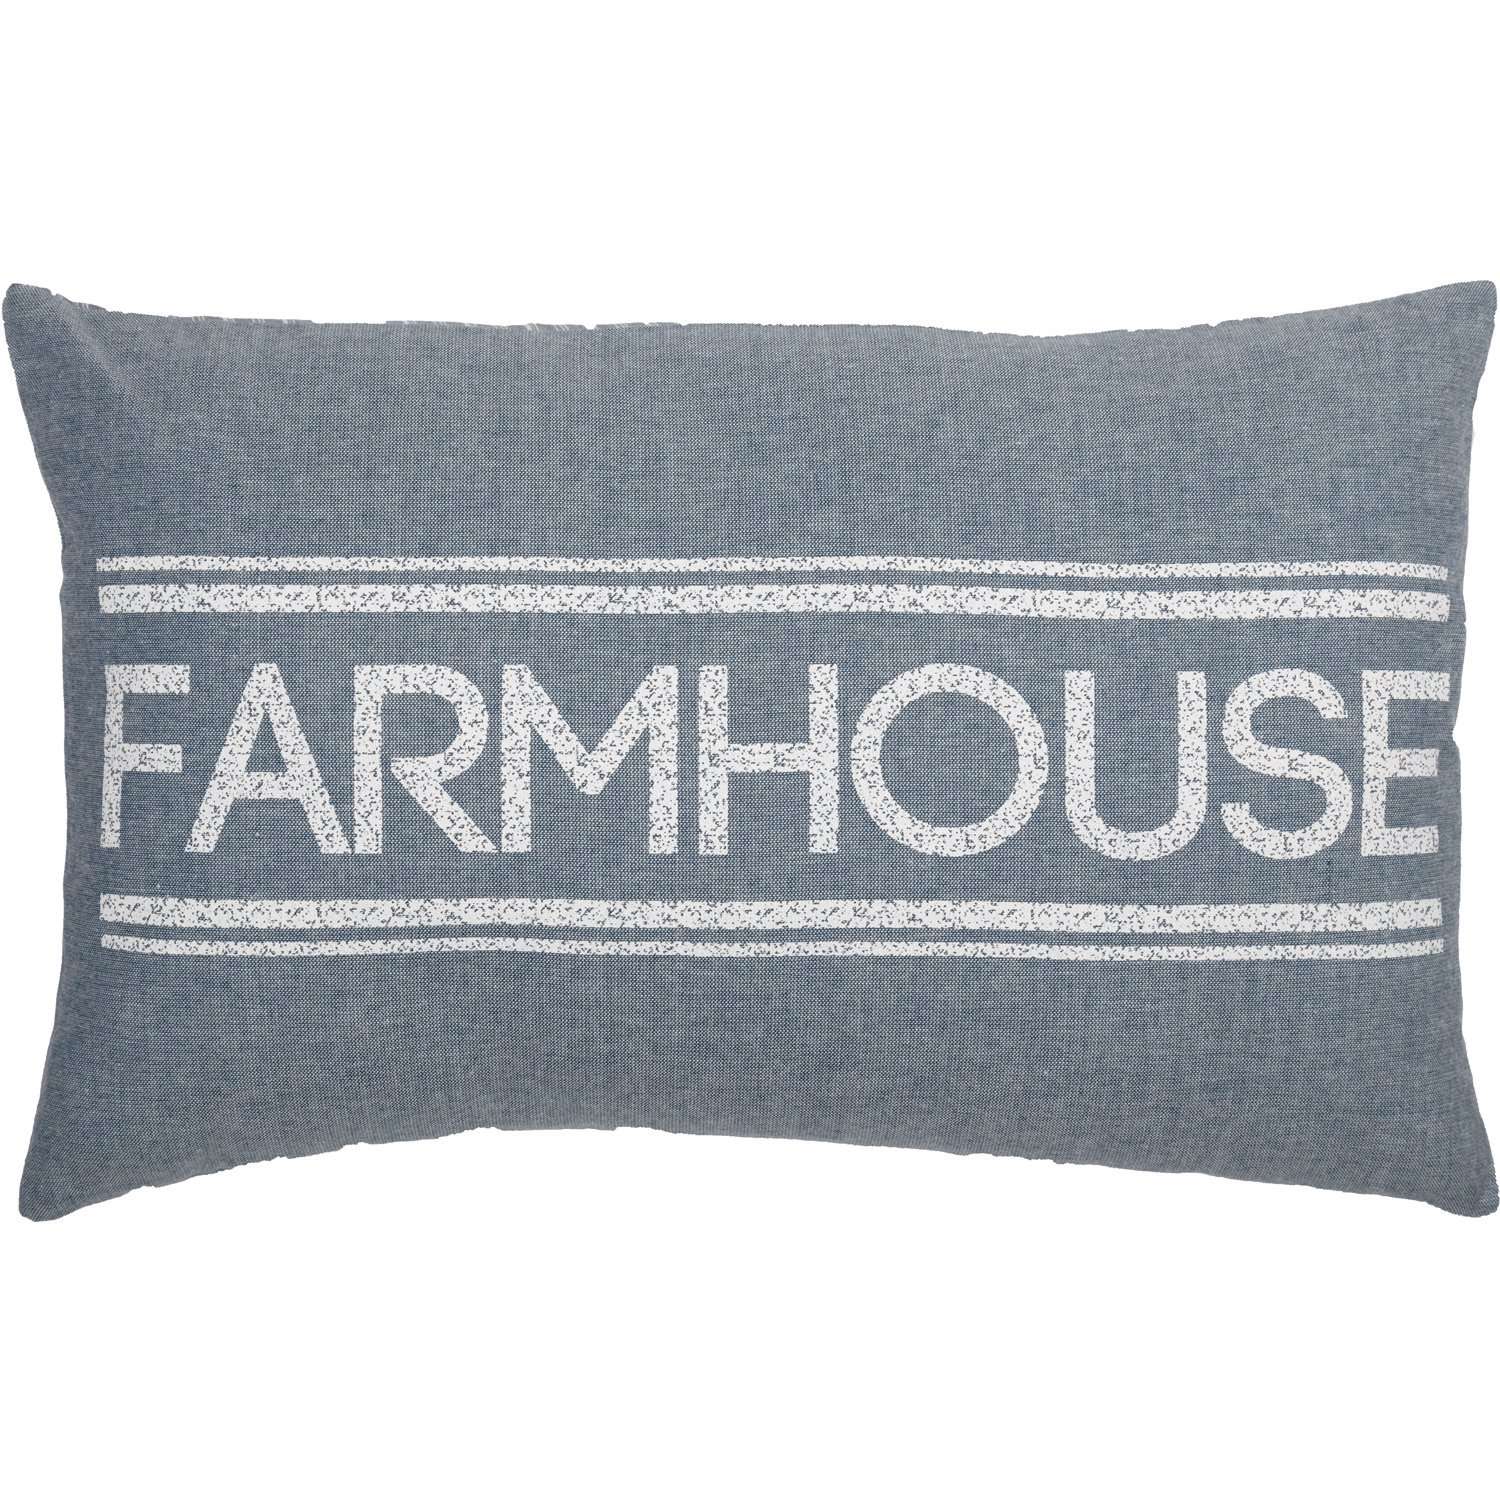 Sawyer Mill Farmhouse Pillow Charcoal, Red & Blue Pillows VHC Brands Blue 